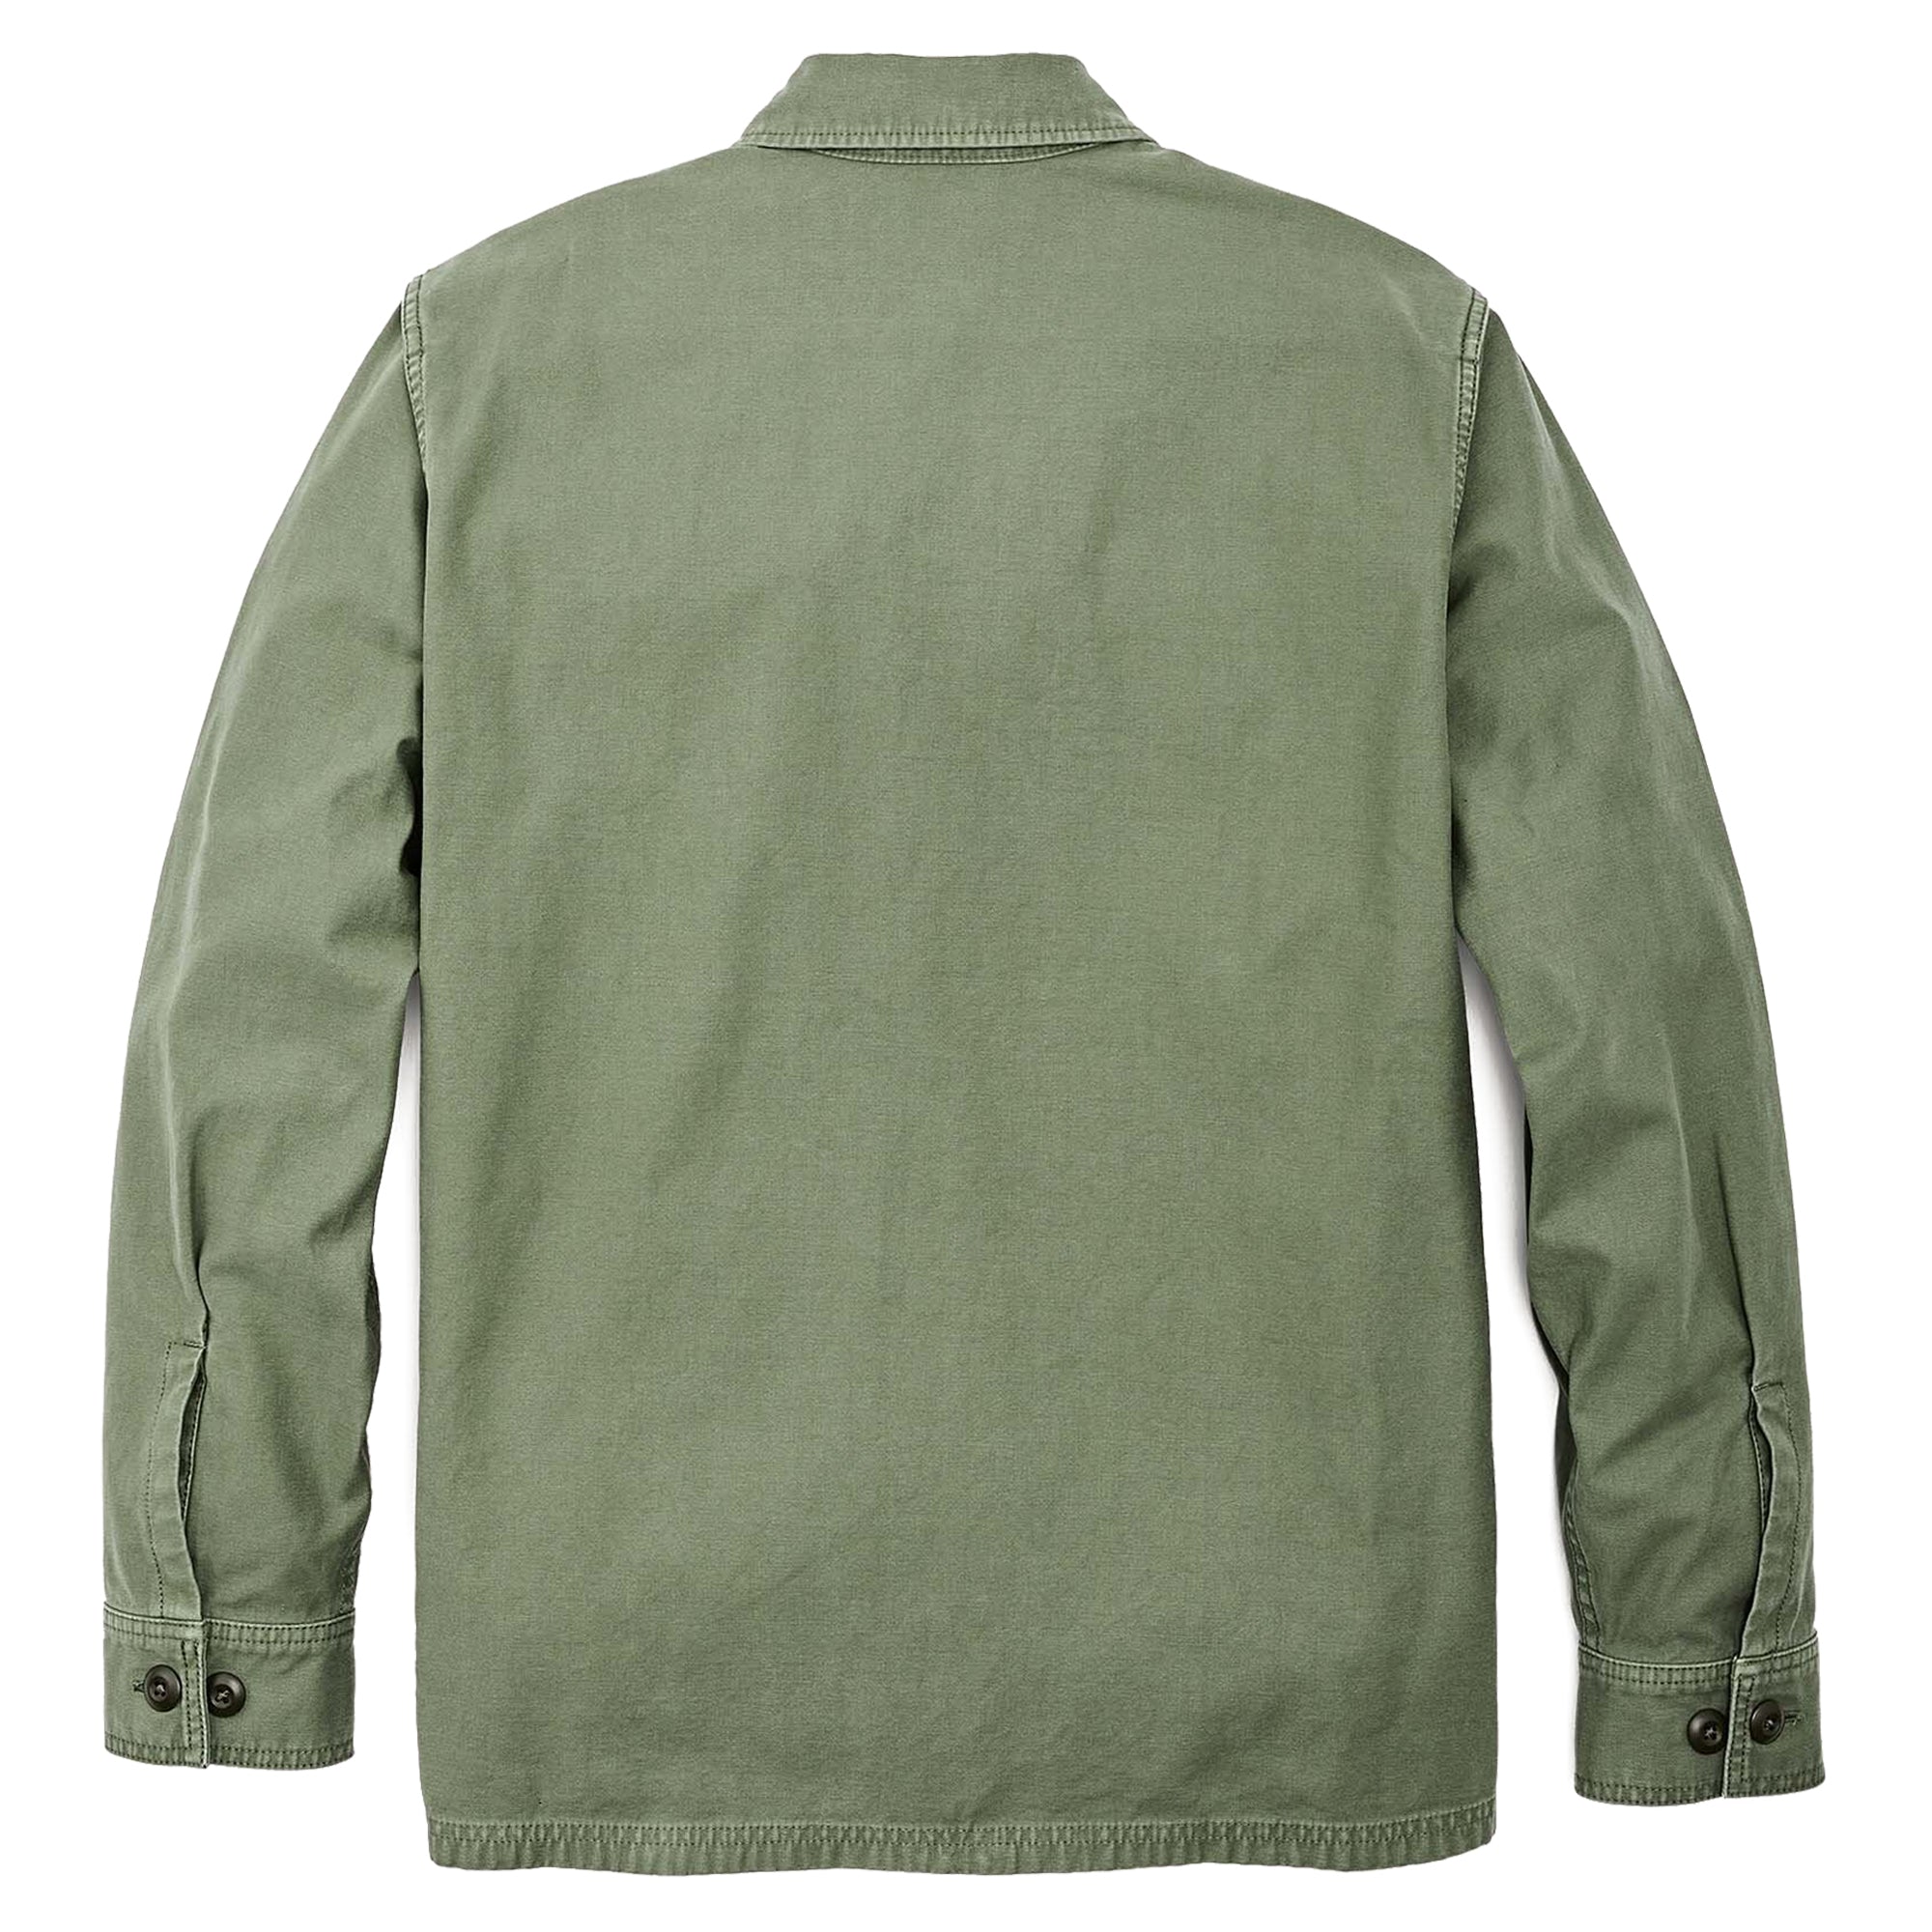 Filson Reverse Sateen Jac-Shirt - Washed Fatigue Green